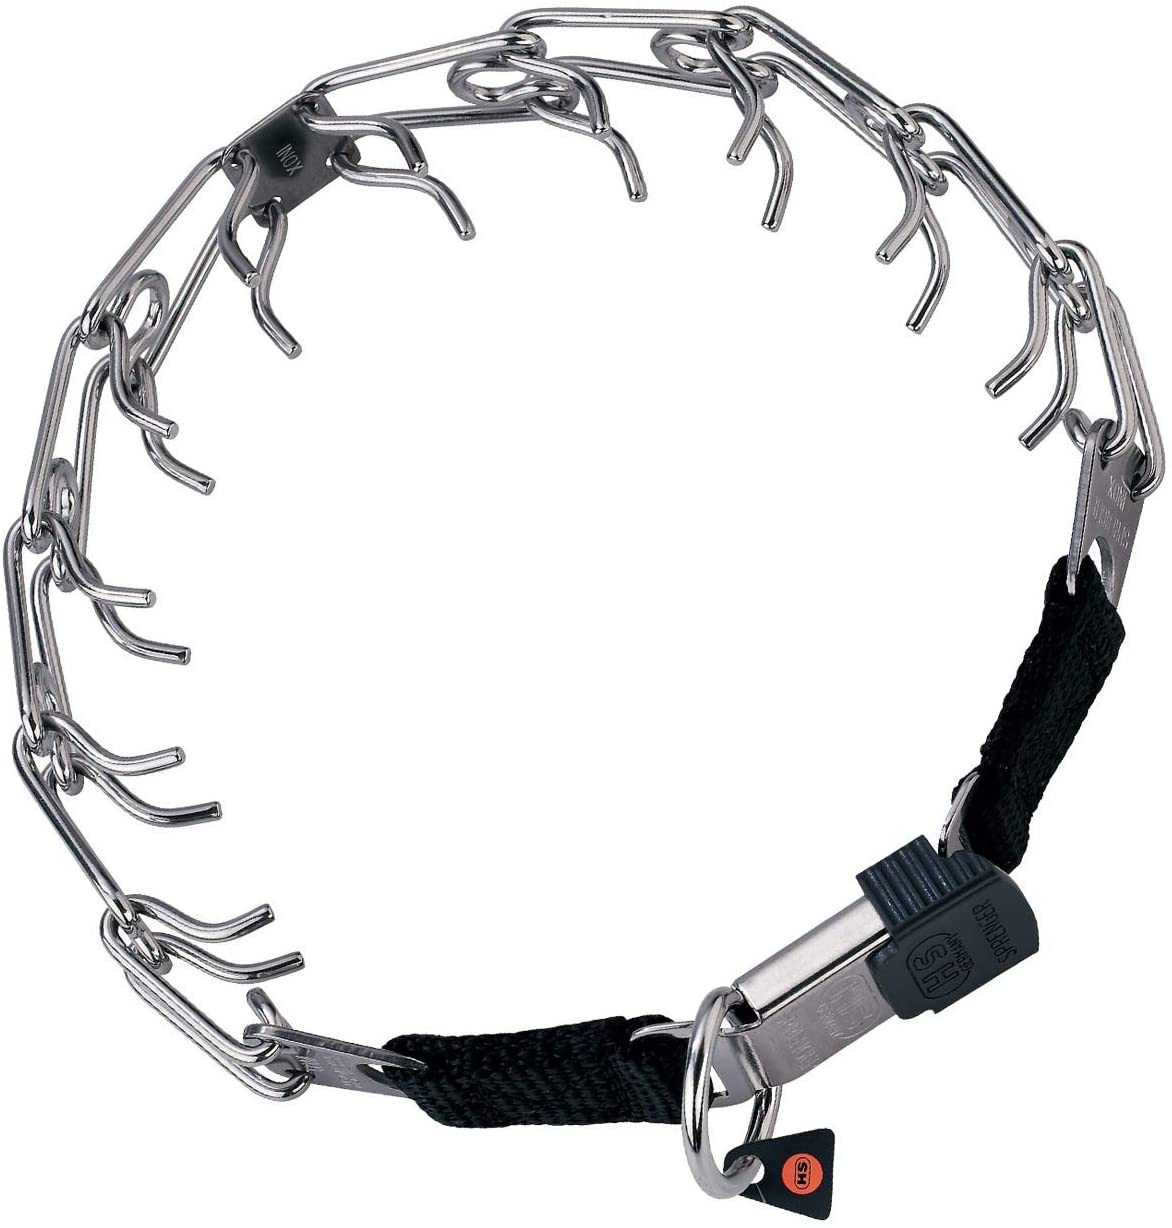  Sprenger - Collar Sprenger Ultra Plus Acero Inox Cierre Clicklock - 2149 - 3,2 mm x 52 cm, Negro 